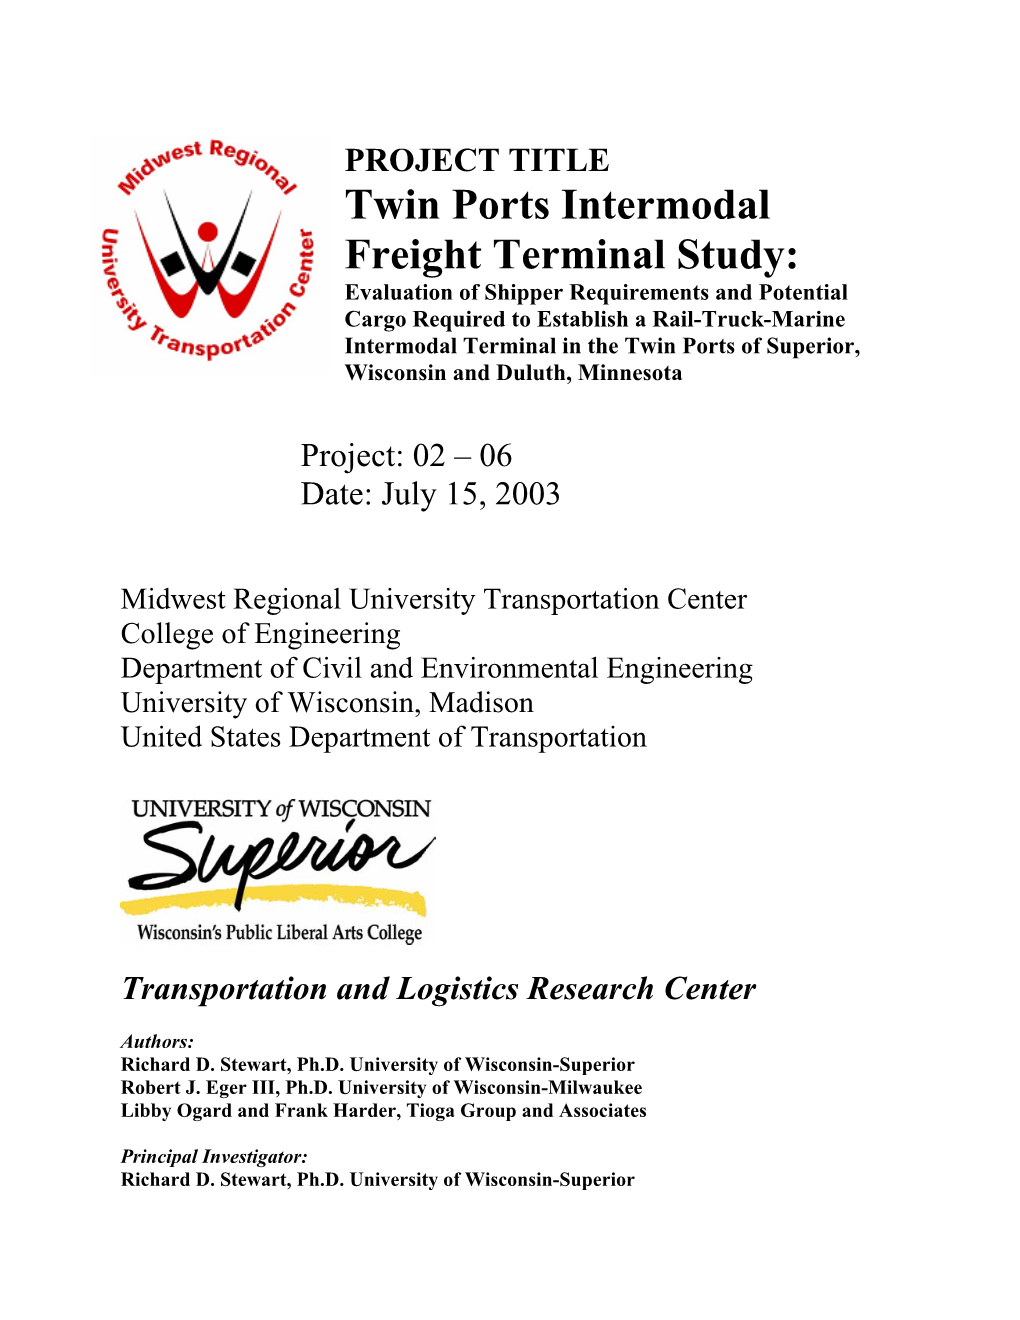 Twin Ports Intermodal Freight Terminal Study